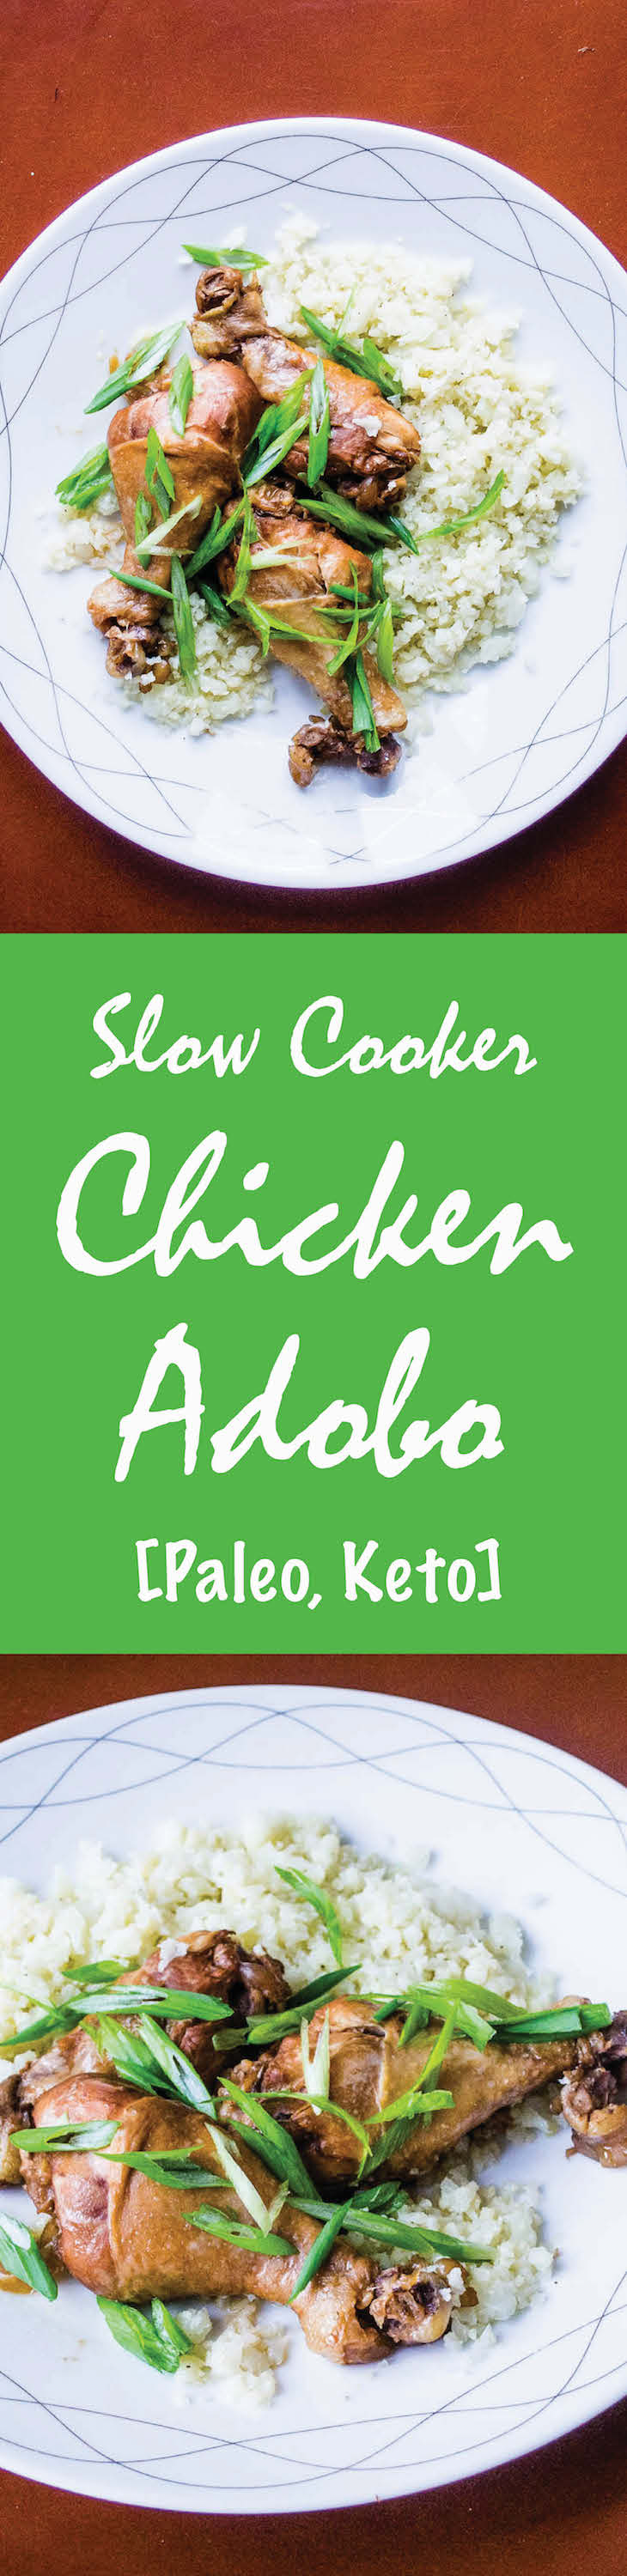 Slow Cooker Chicken Adobo Recipe [Paleo, Keto] #paleo #keto - https://paleoflourish.com/slow-cooker-chicken-adobo-paleo-keto